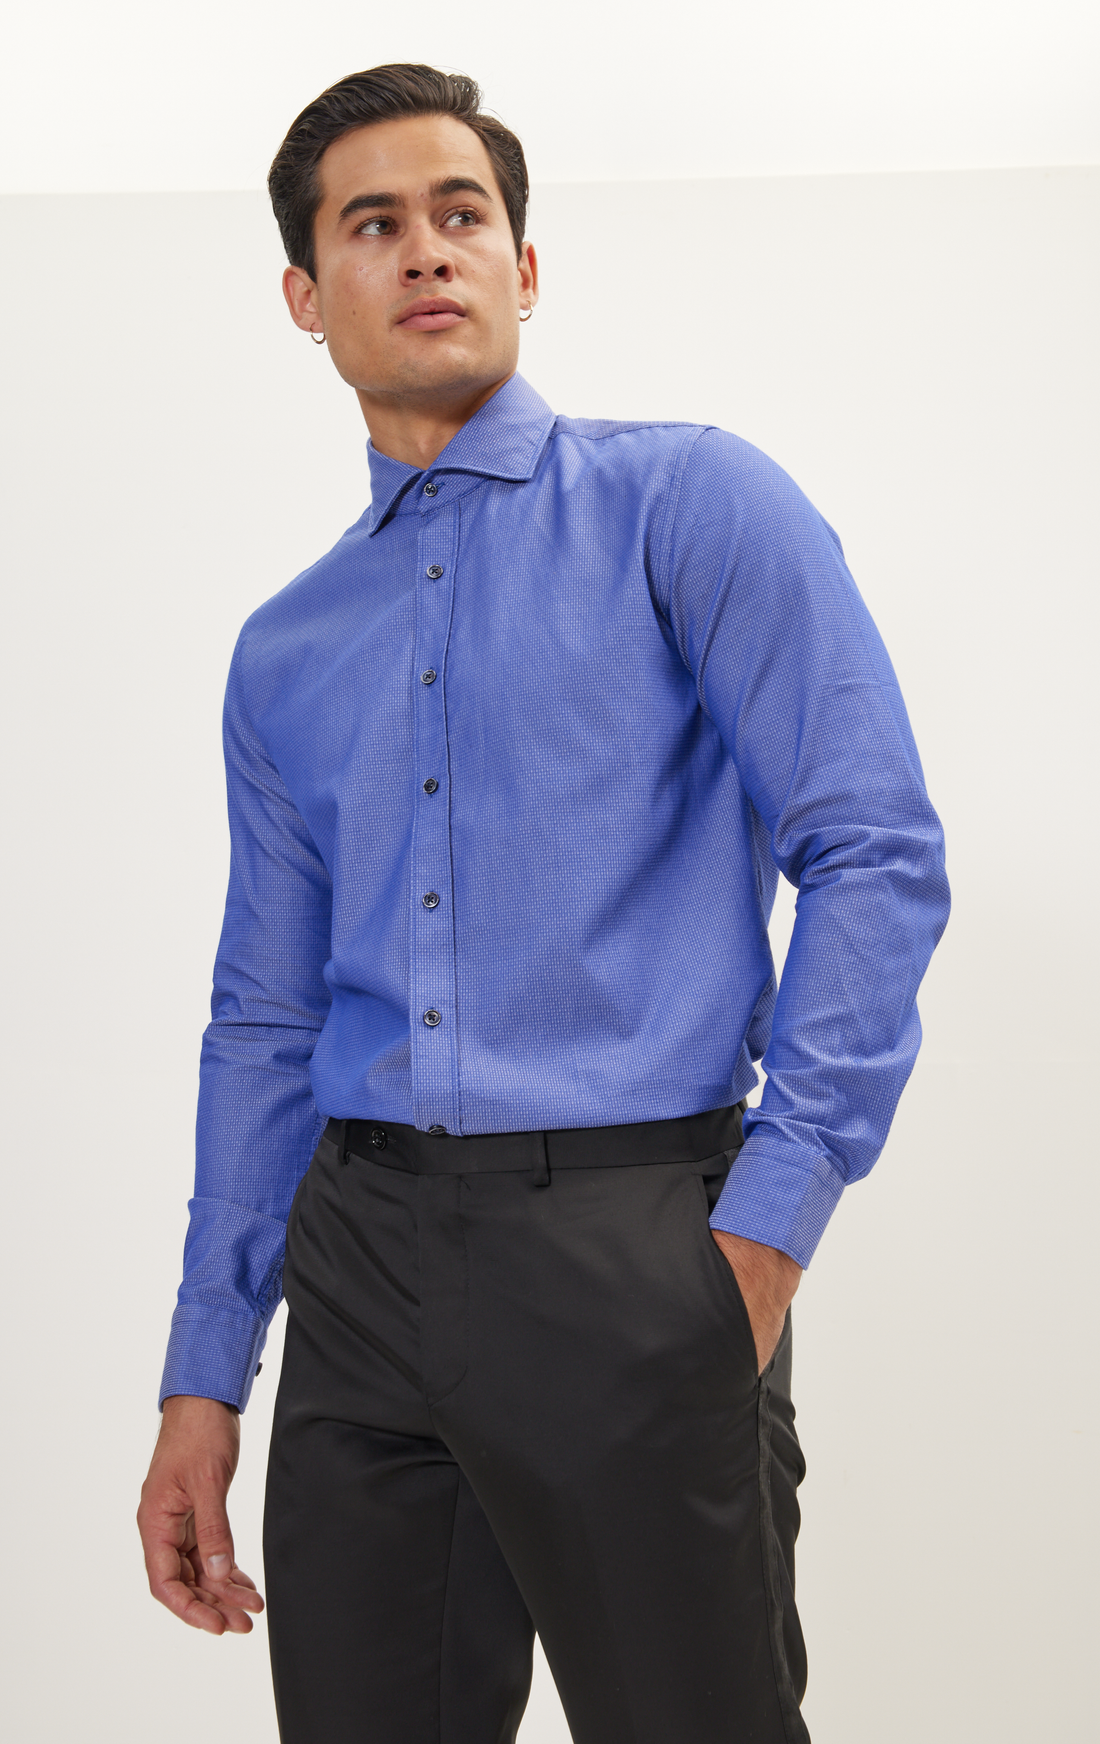 Jacquard Cotton Tonal Button Dress Shirt - Dark Blue